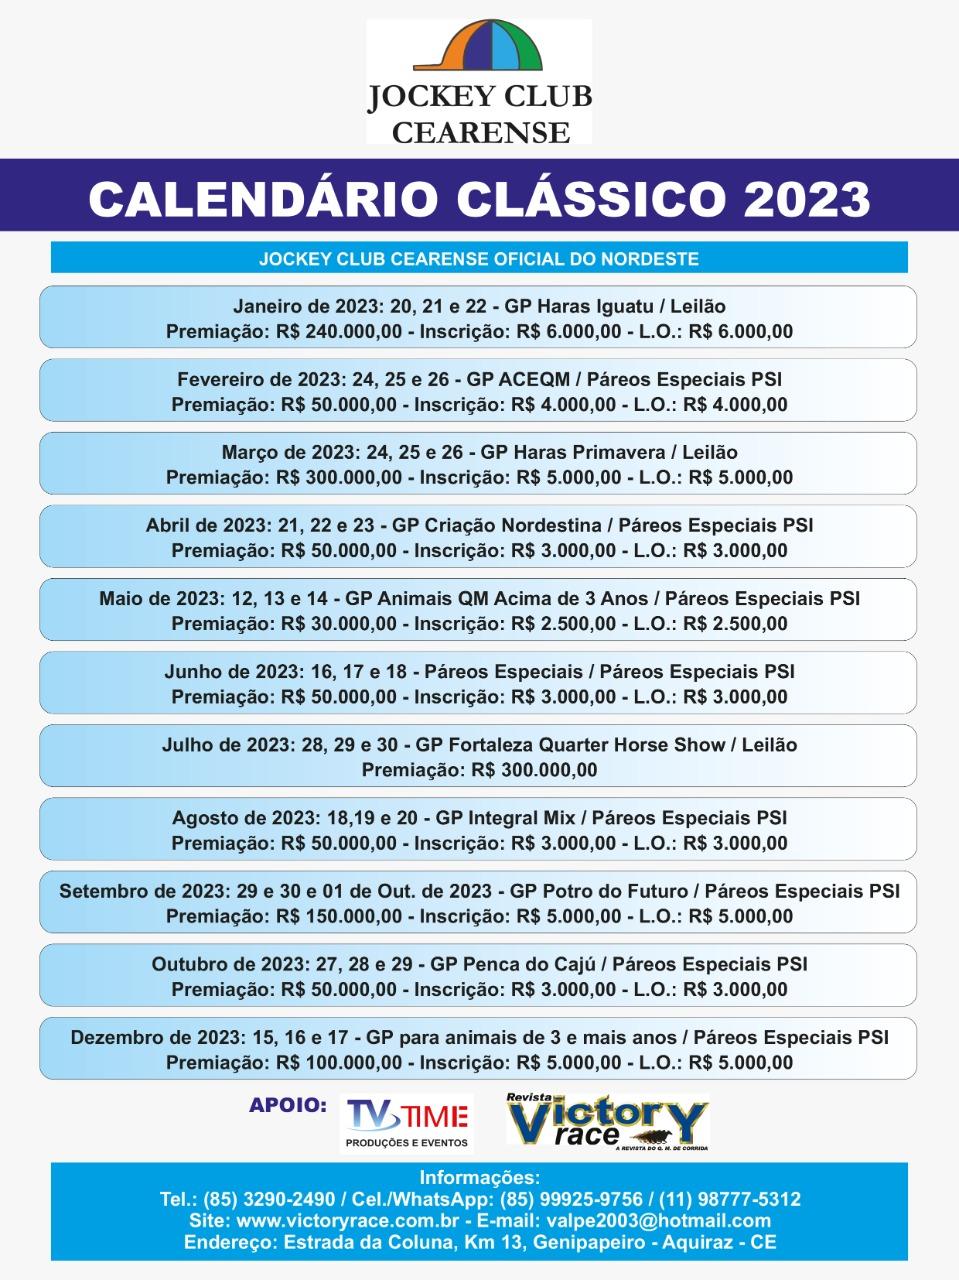 Calendario 2023 do Jockey Club Cearense